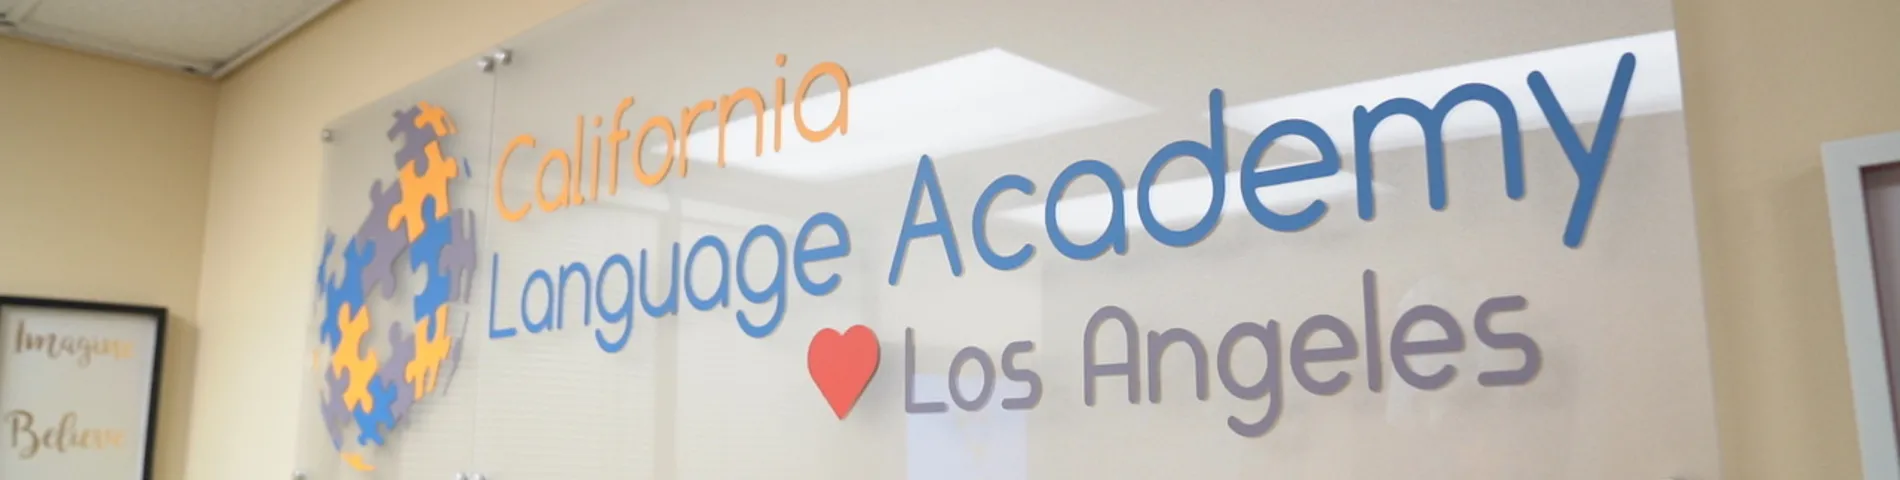 California Language Academy resim 1